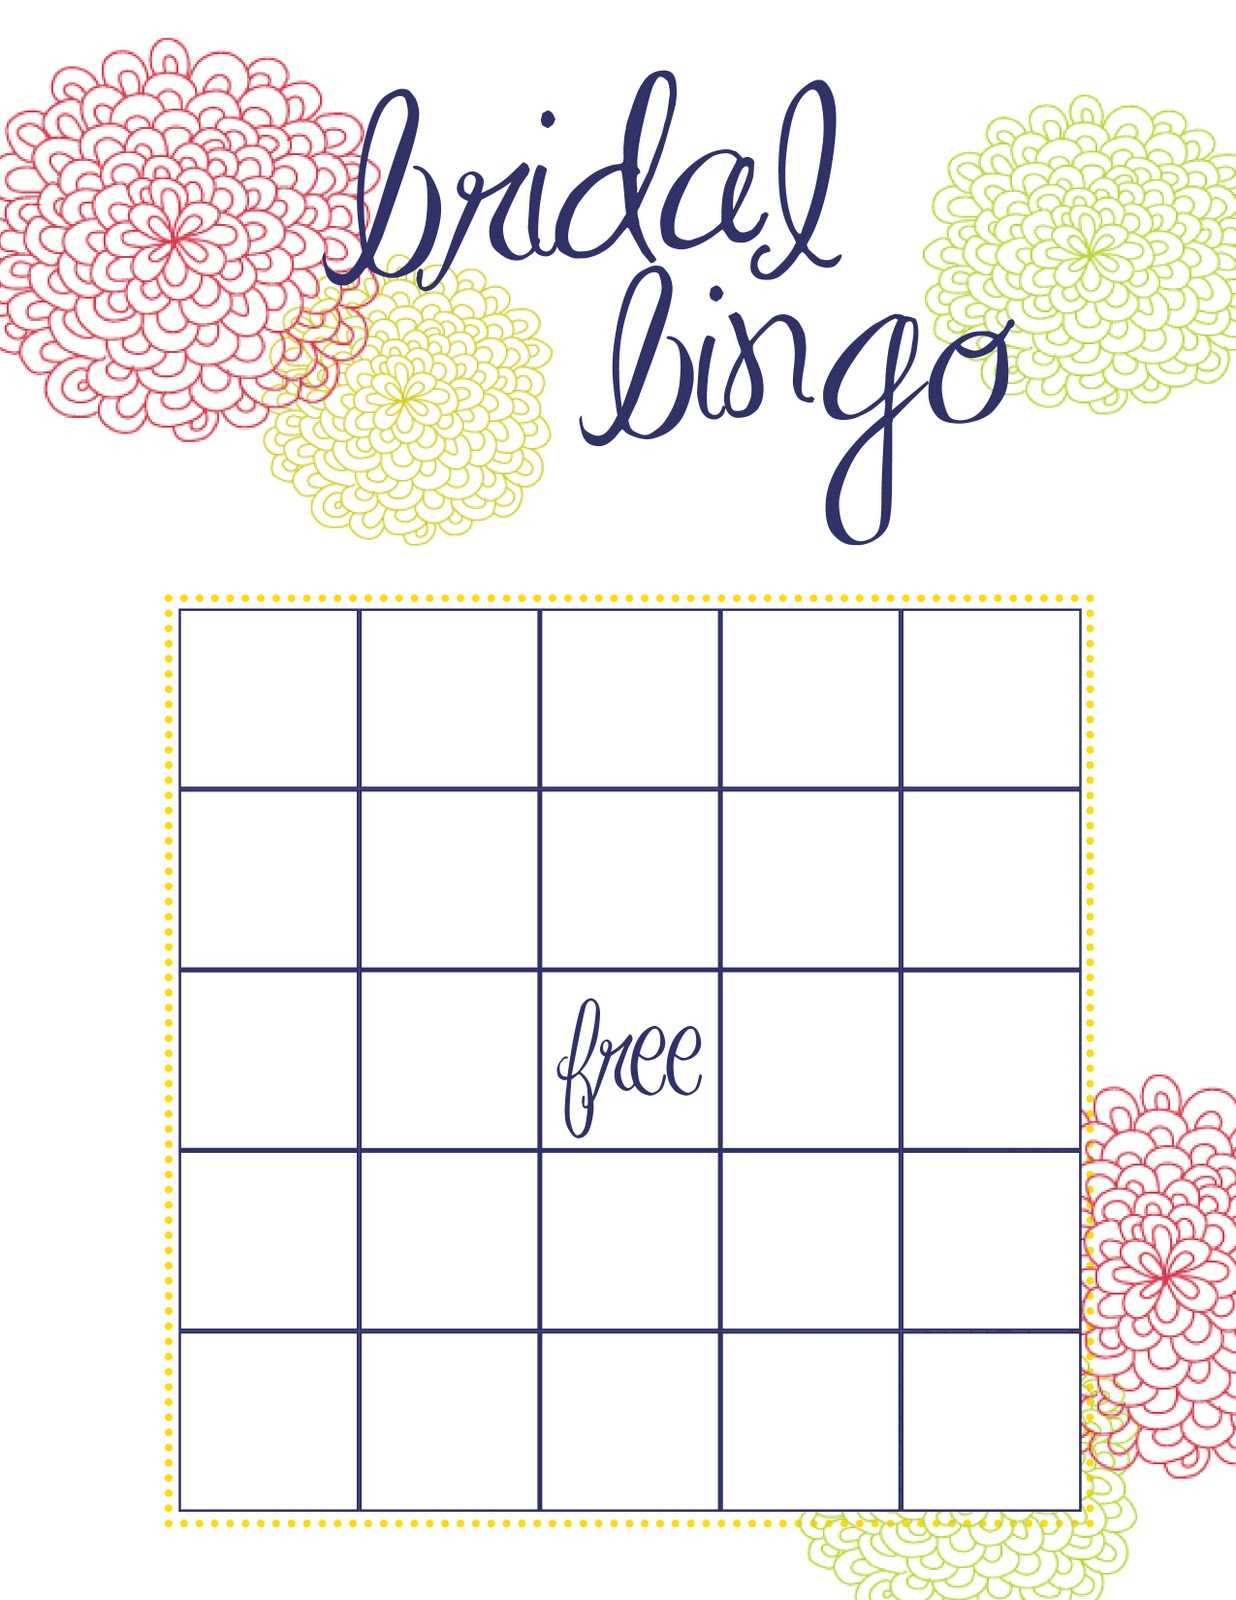 Free Bridal Bingo Template ] - Bridal Shower Bingo Template Within Blank Bridal Shower Bingo Template